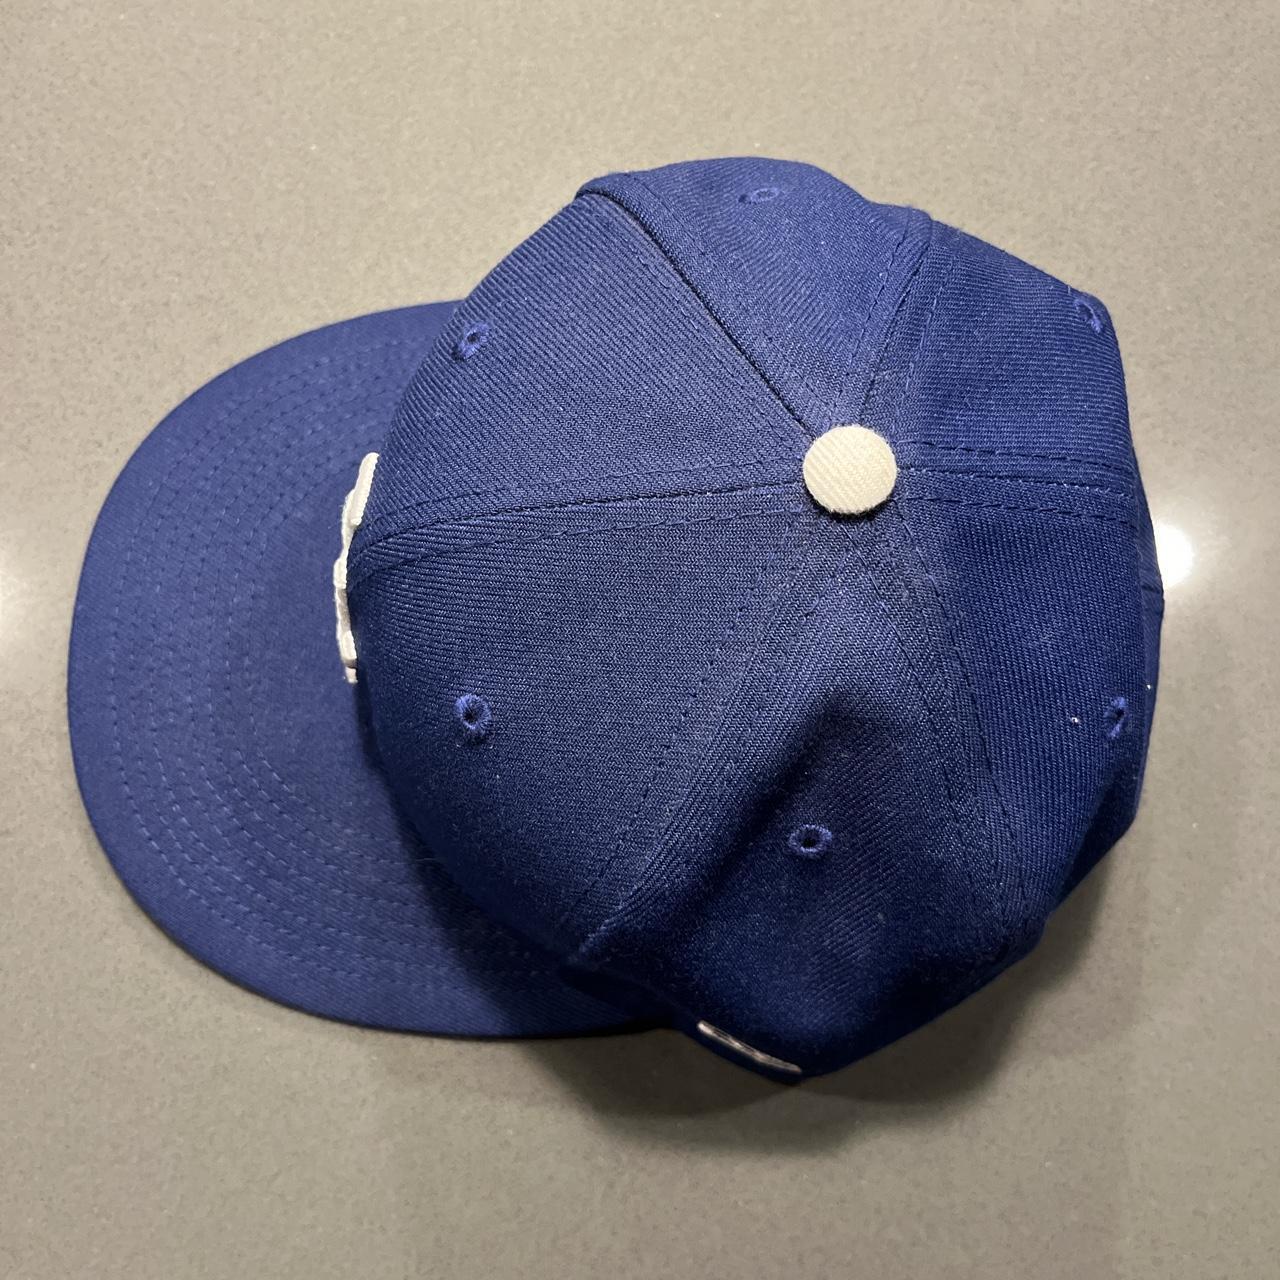 New Era LA Dodgers Fitted Hat size 7 3/8 Worn 1x - Depop